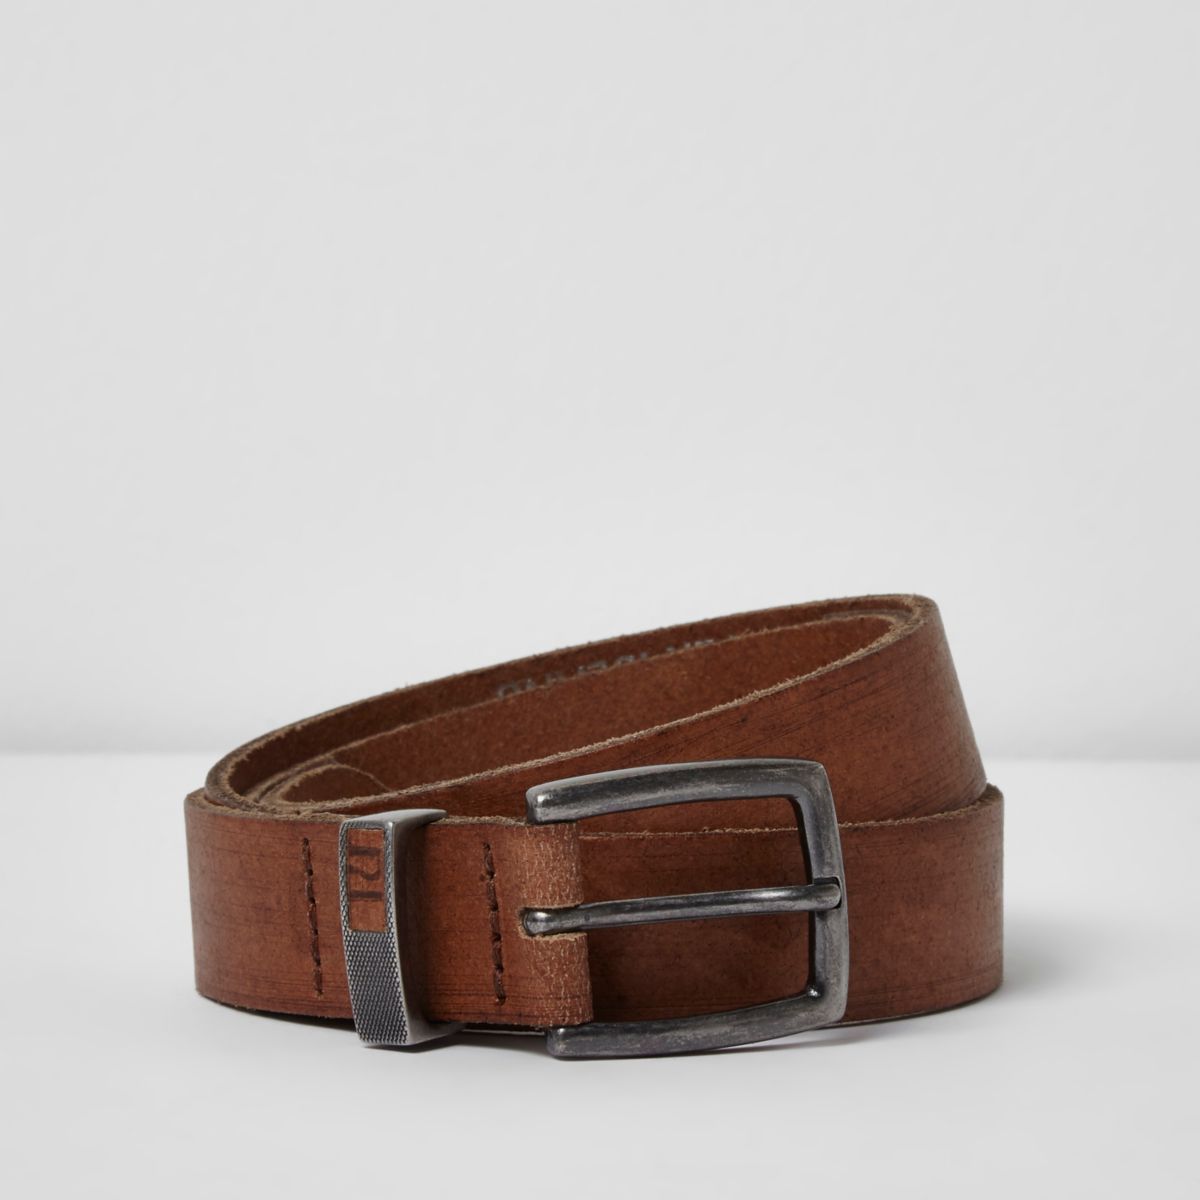 Light brown leather belt - Belts - Accessories - men